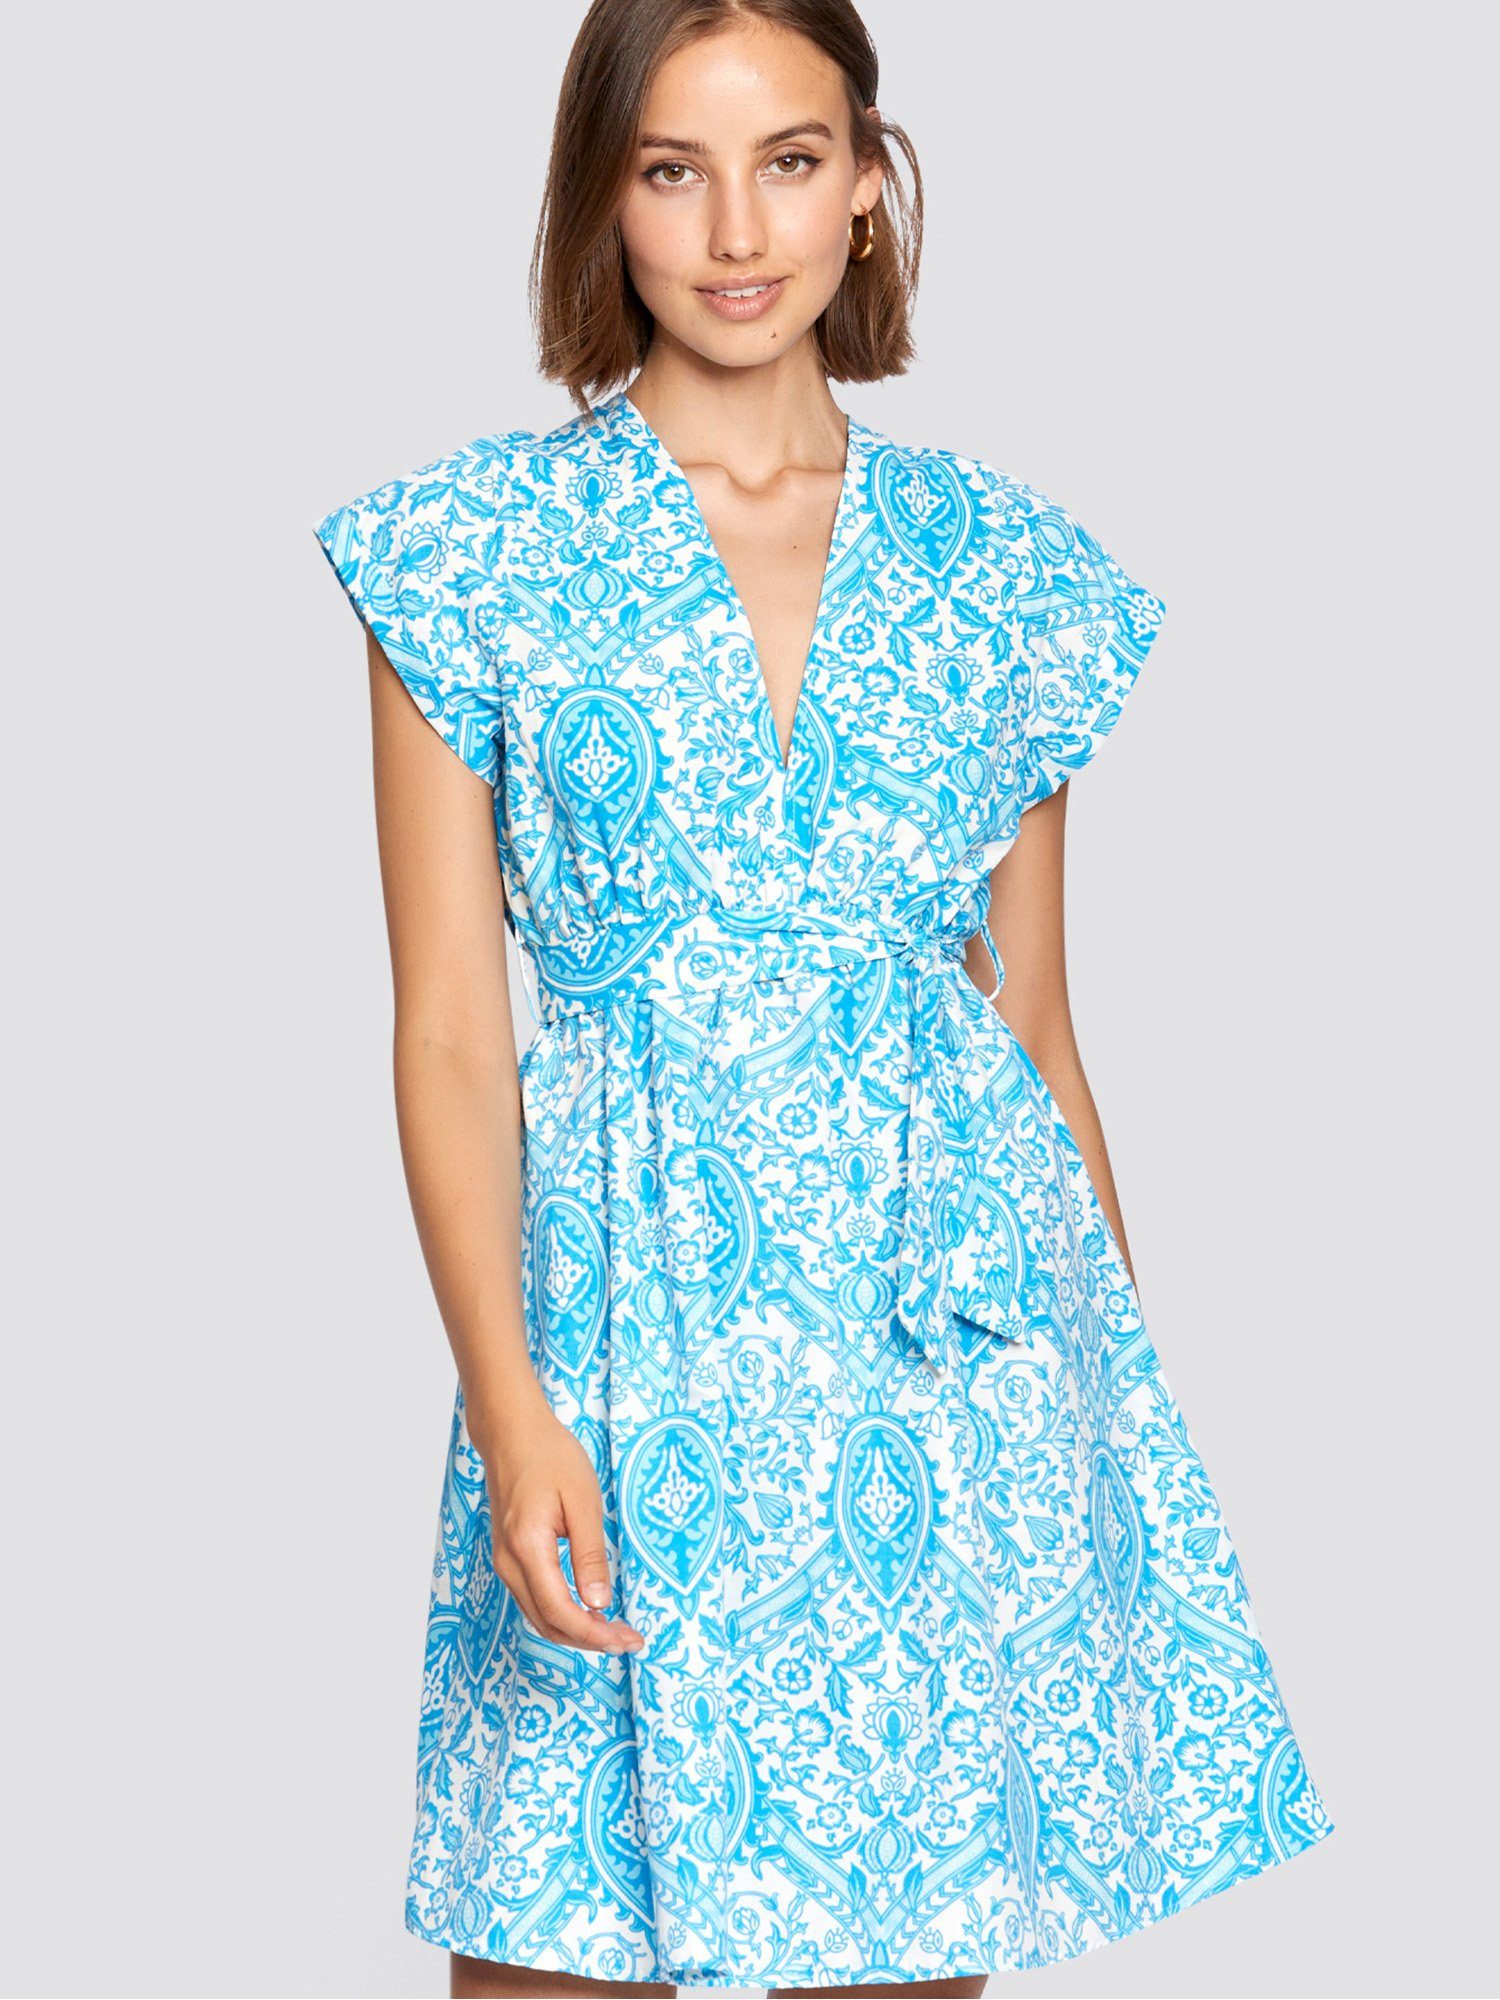 Freshlions Minikleid Gemustertes Kleid Sonstige, blau Taillentunnelzug